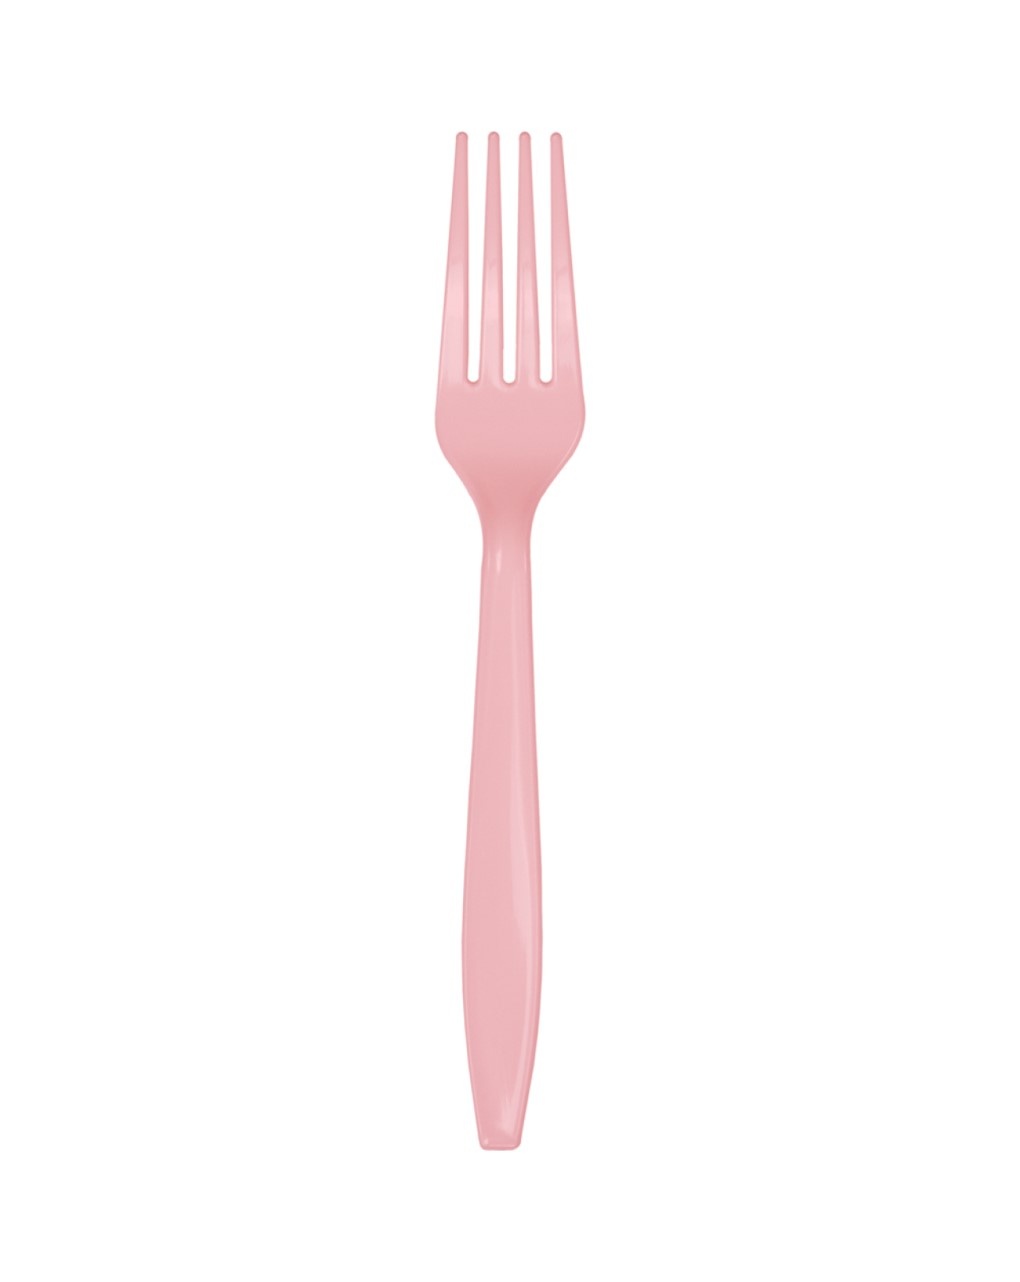 Forchetta plastica h. 18 cm - 24 pezzi  - rosa pastello - Bigiemme